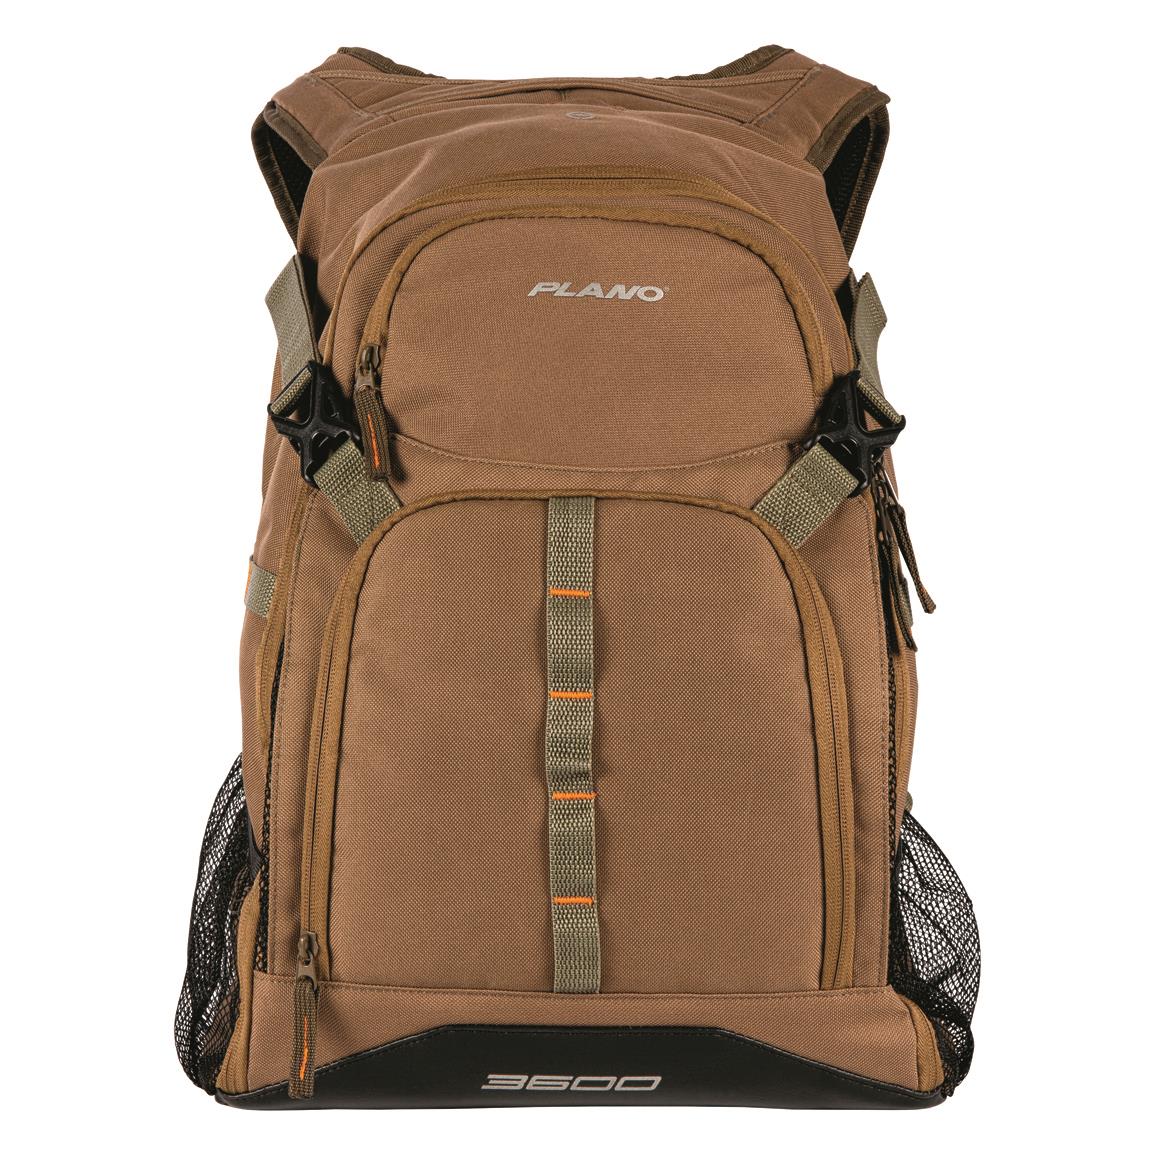 Plano E-Series 3600 Tackle Backpack, Tan